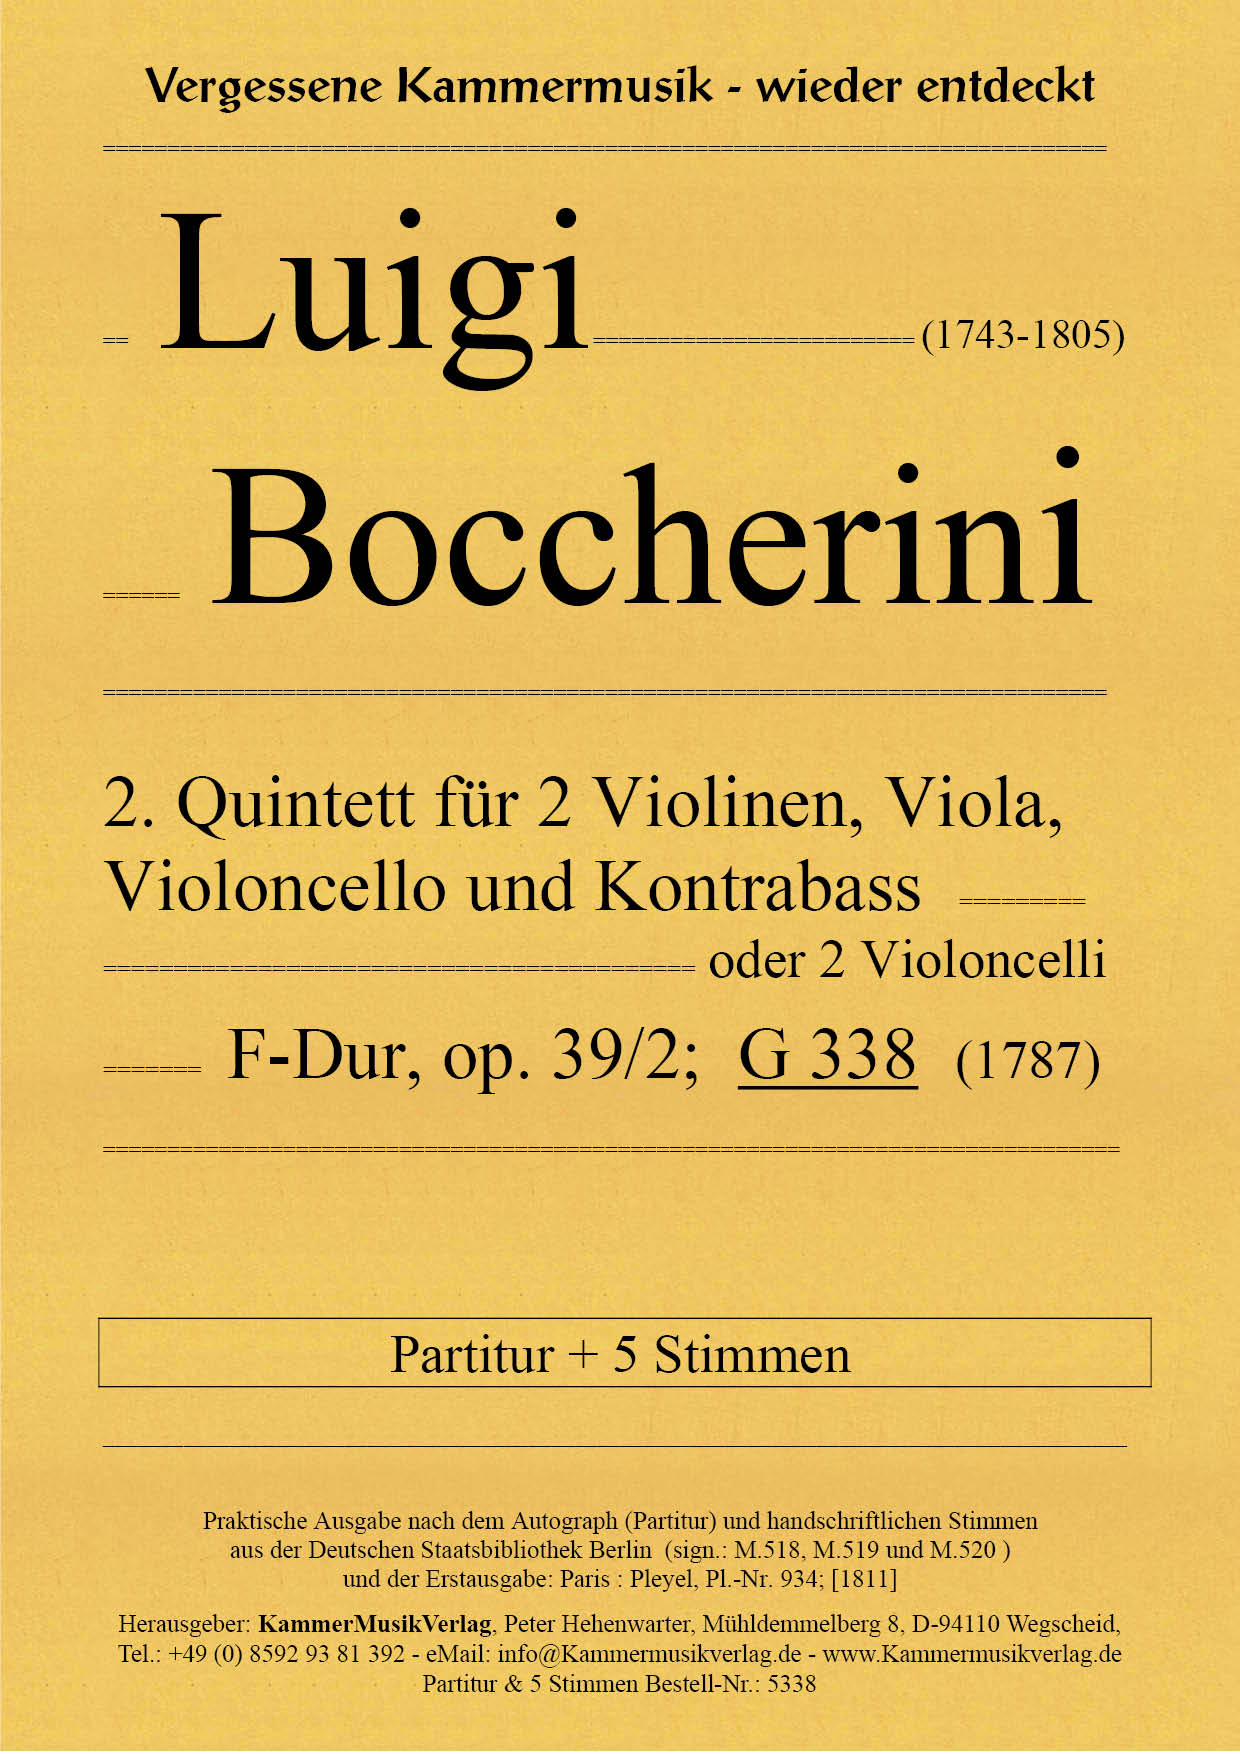 Boccherini: String Quintet in F Major, G 338, Op. 39, No. 2